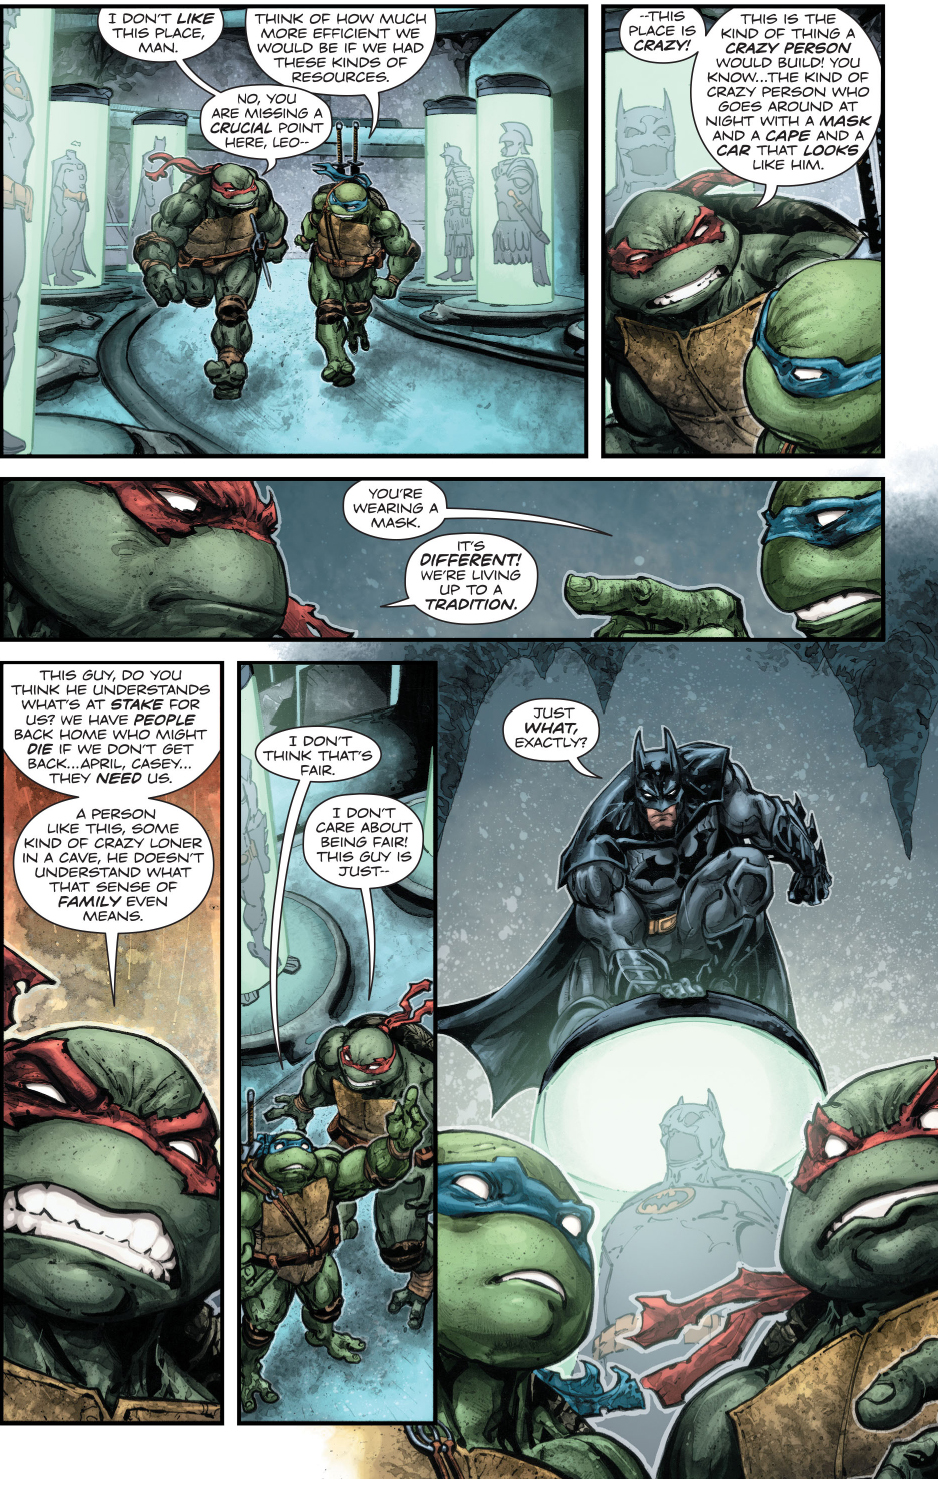 teenage mutant ninja turtles in the batcave 